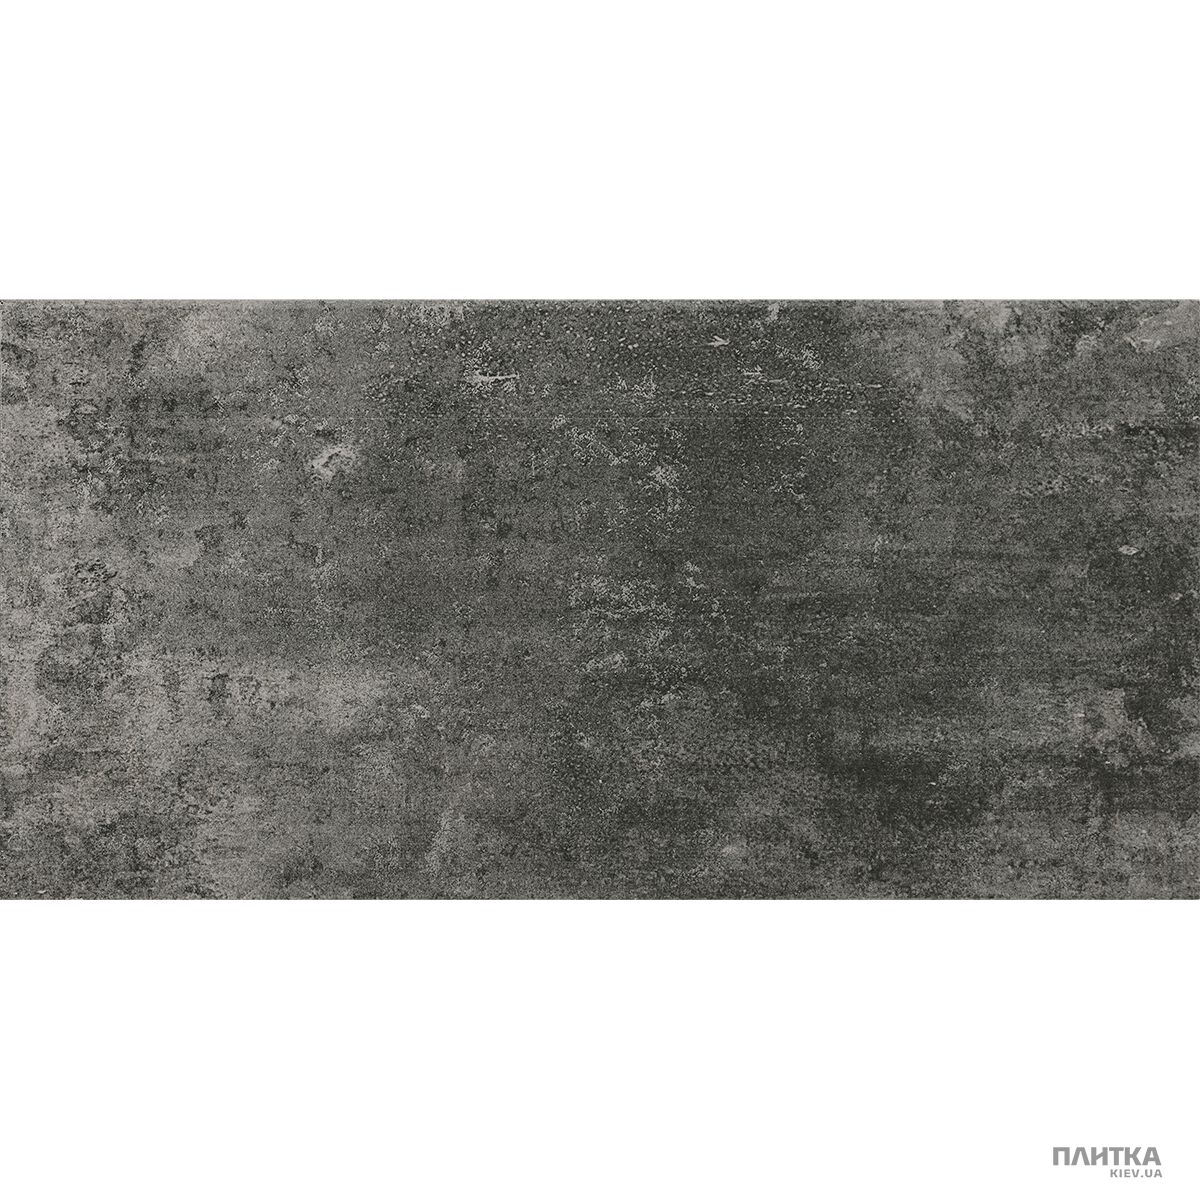 Плитка Alaplana Lucy LUCY GRIS BRILLO серый